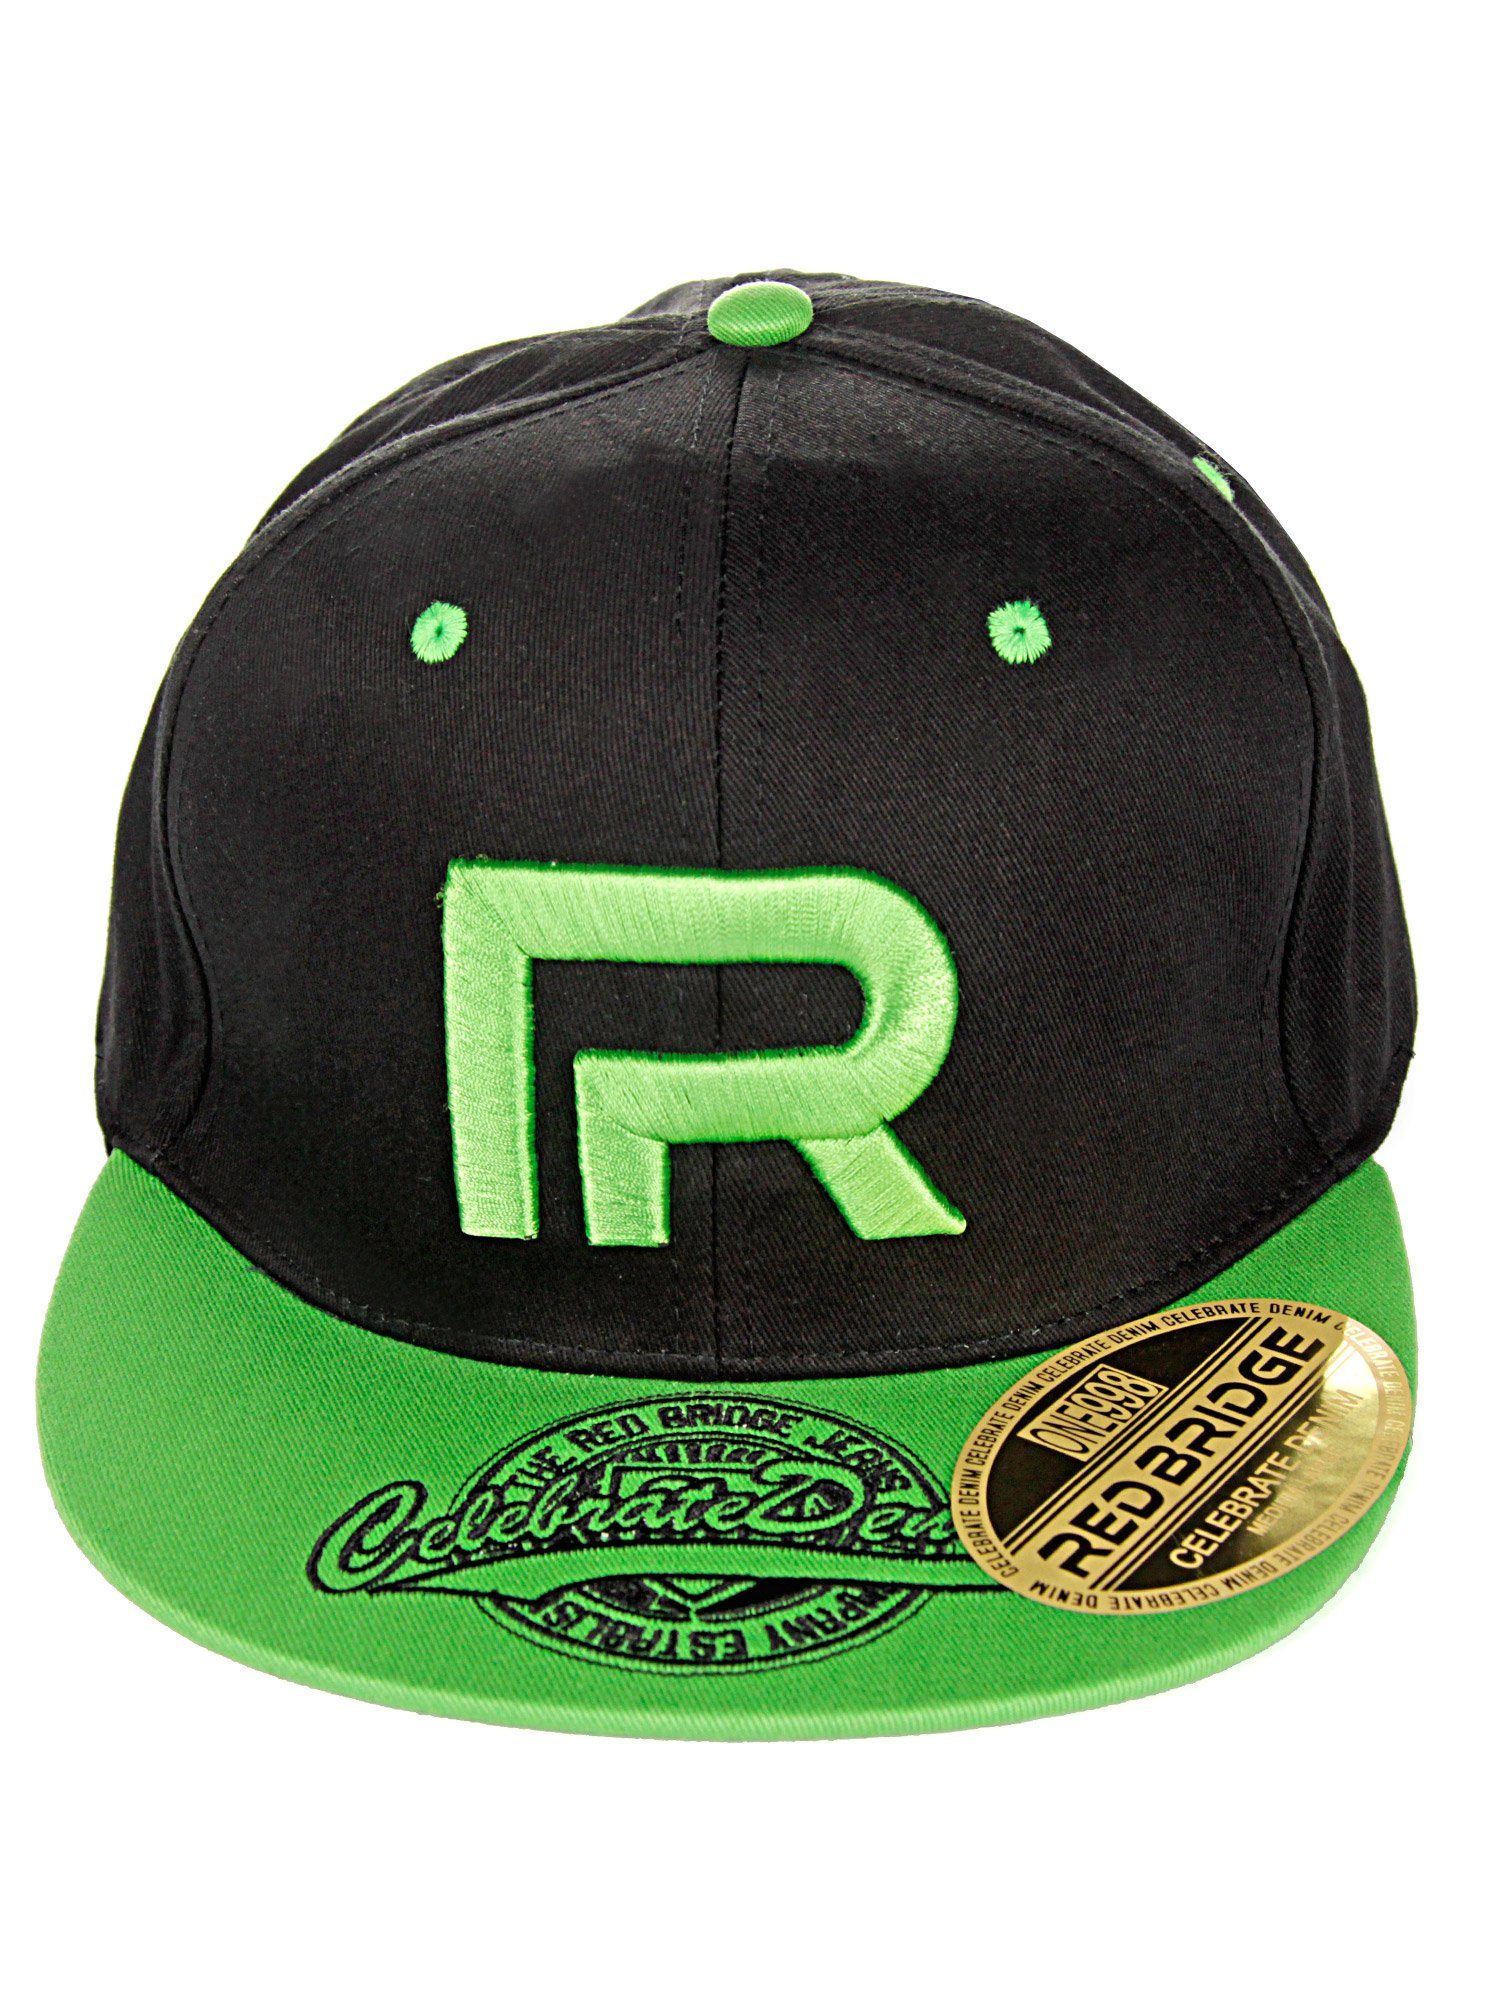 RedBridge Baseball Cap mit schwarz-grün Wellingborough Druckverschluss